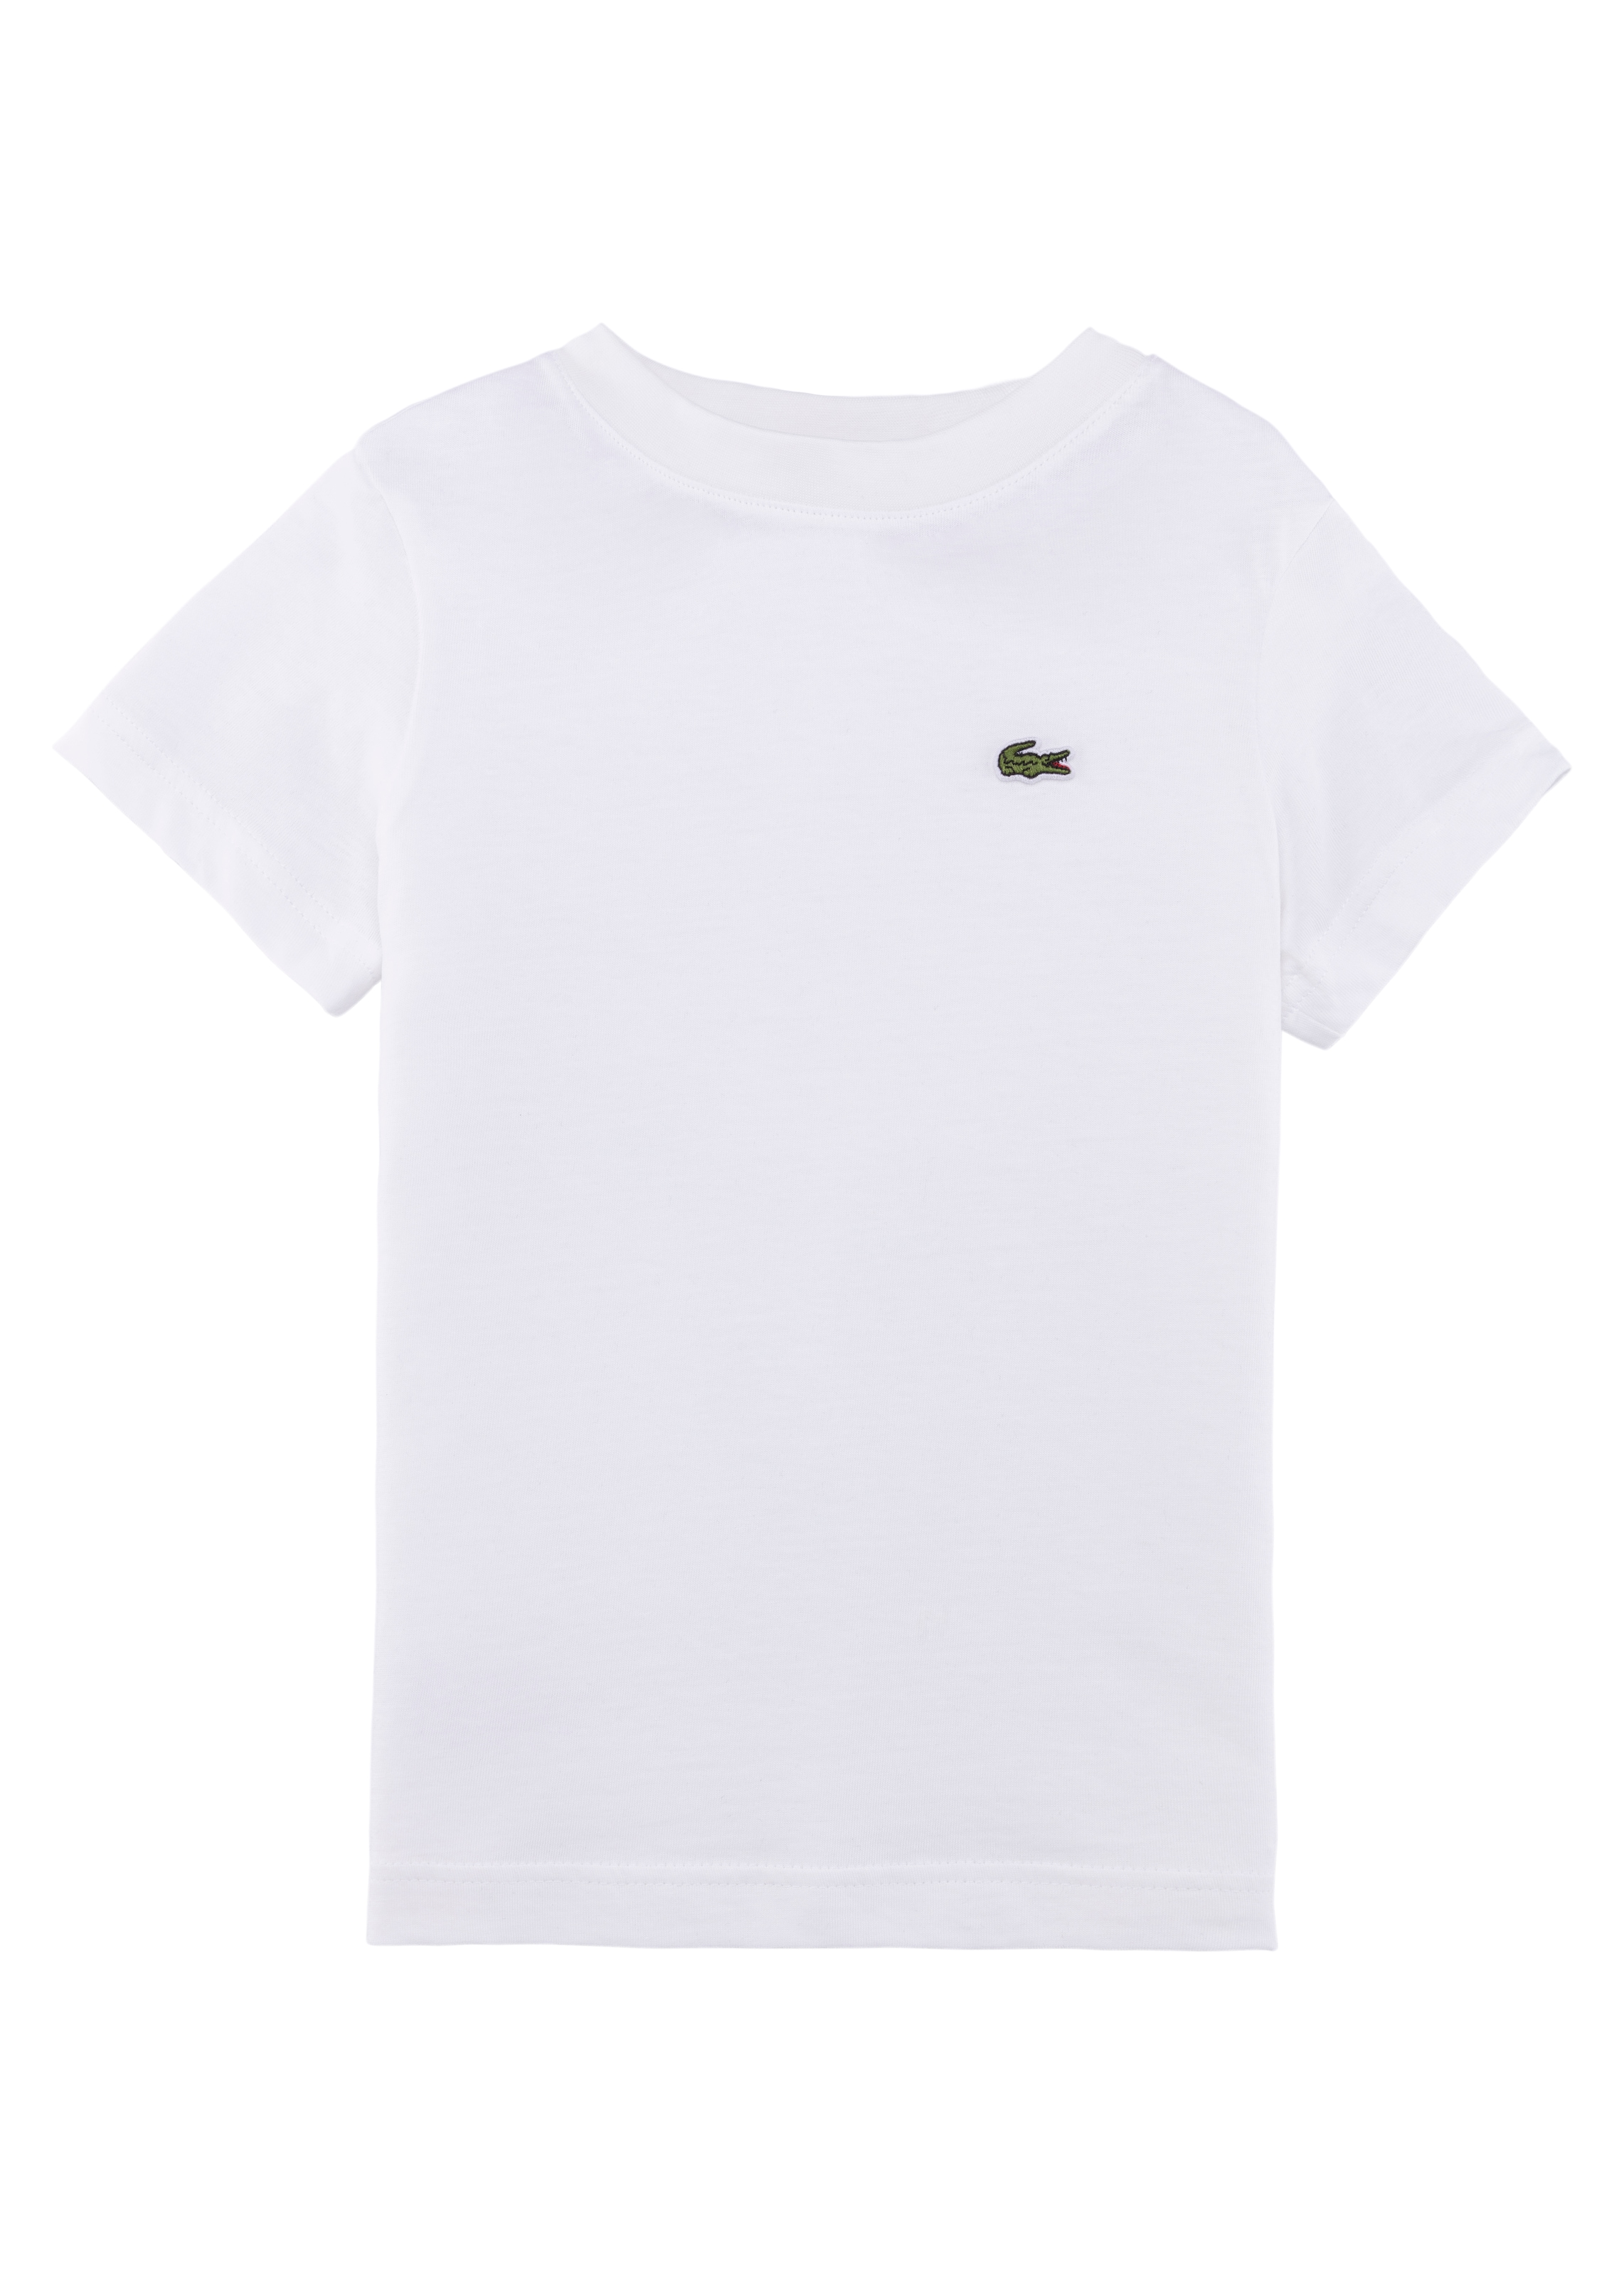 Lacoste T-Shirt, mit Lacoste-Krokodil auf Brusthöhe